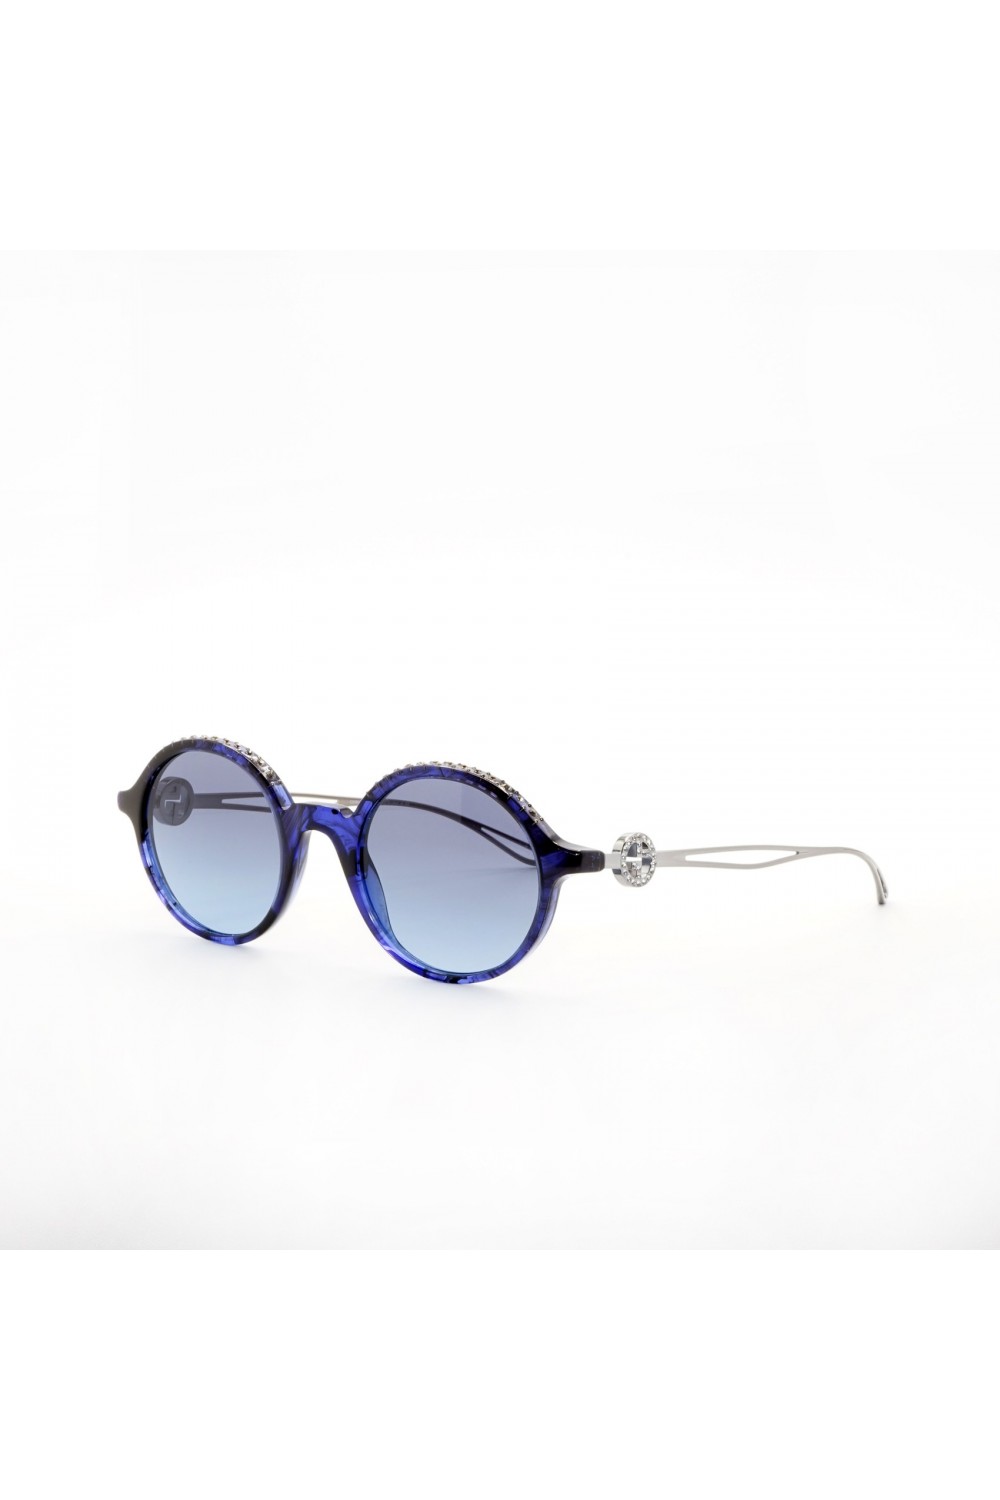 Giorgio Armani - Occhiali da sole in celluloide cat eye per donna blu - AR8144